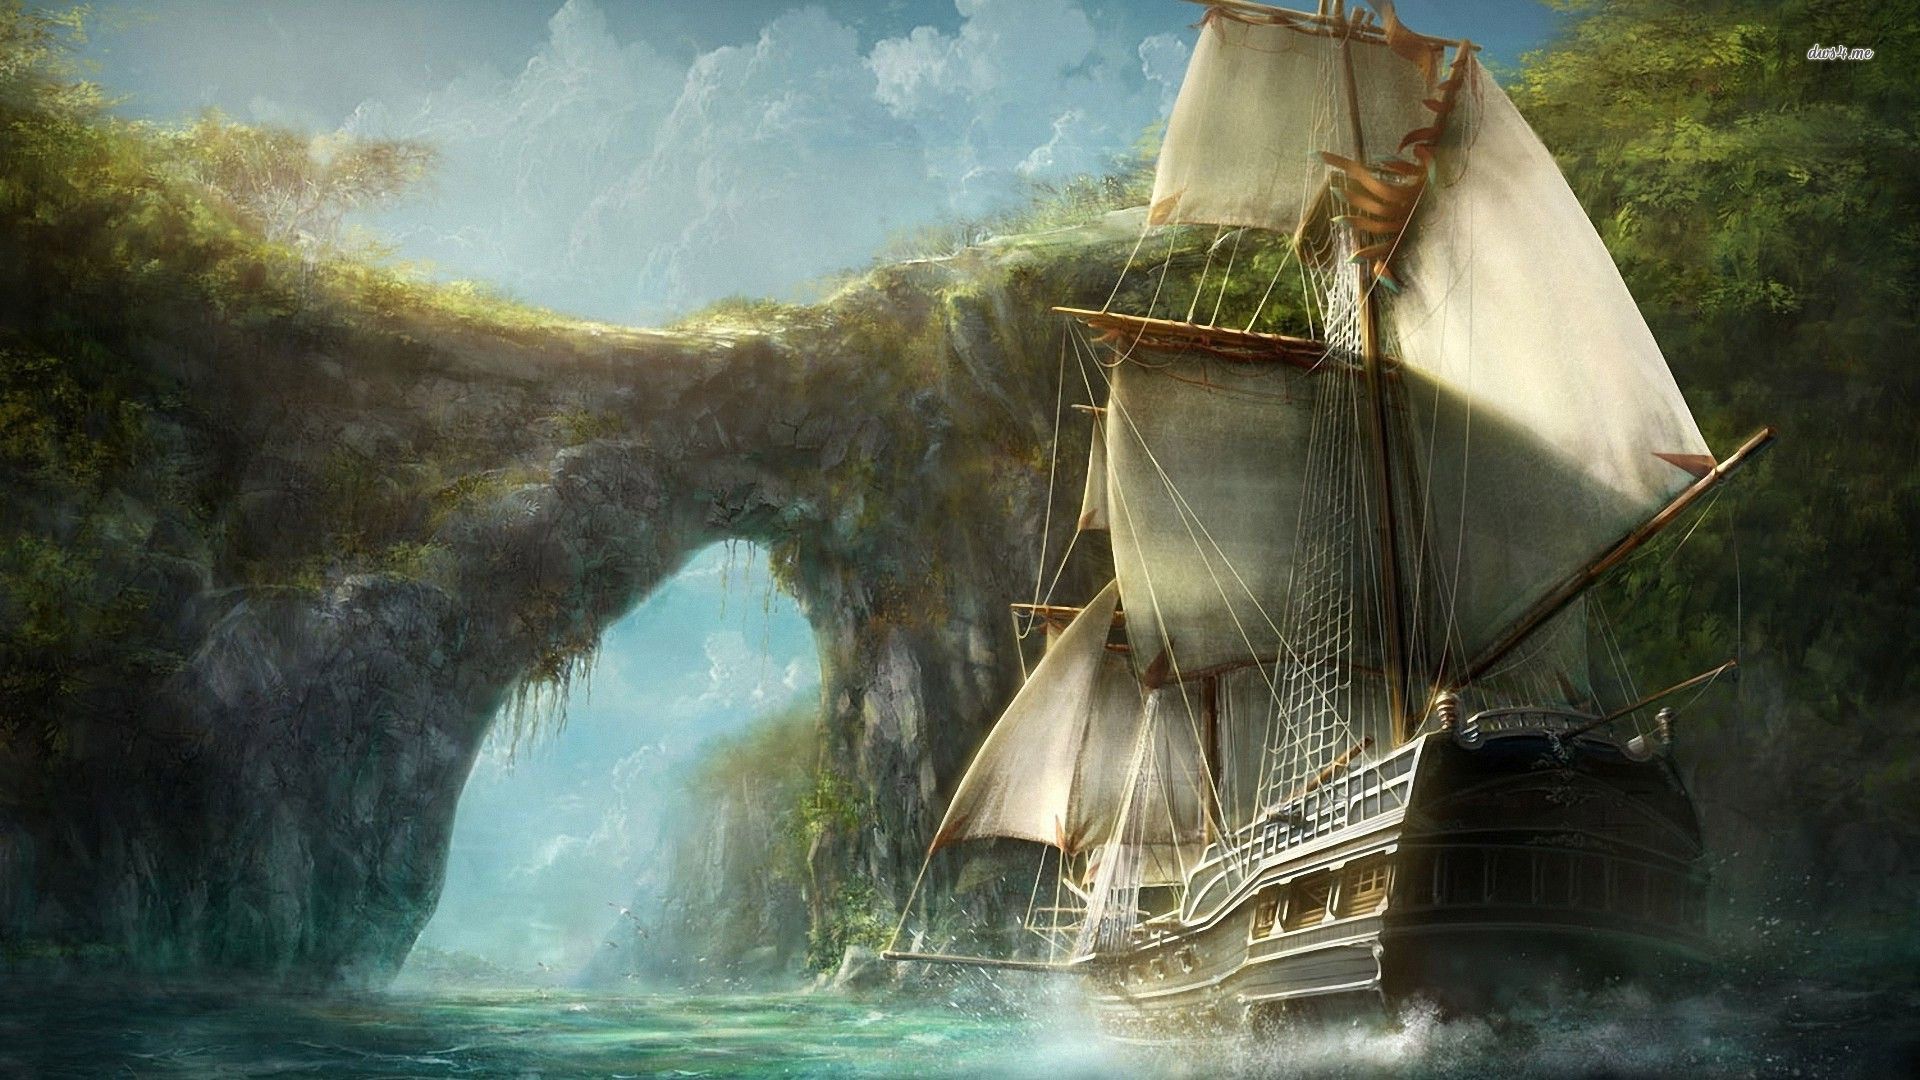 Medieval ship entering the island wallpaper - Fantasy wallpapers ...